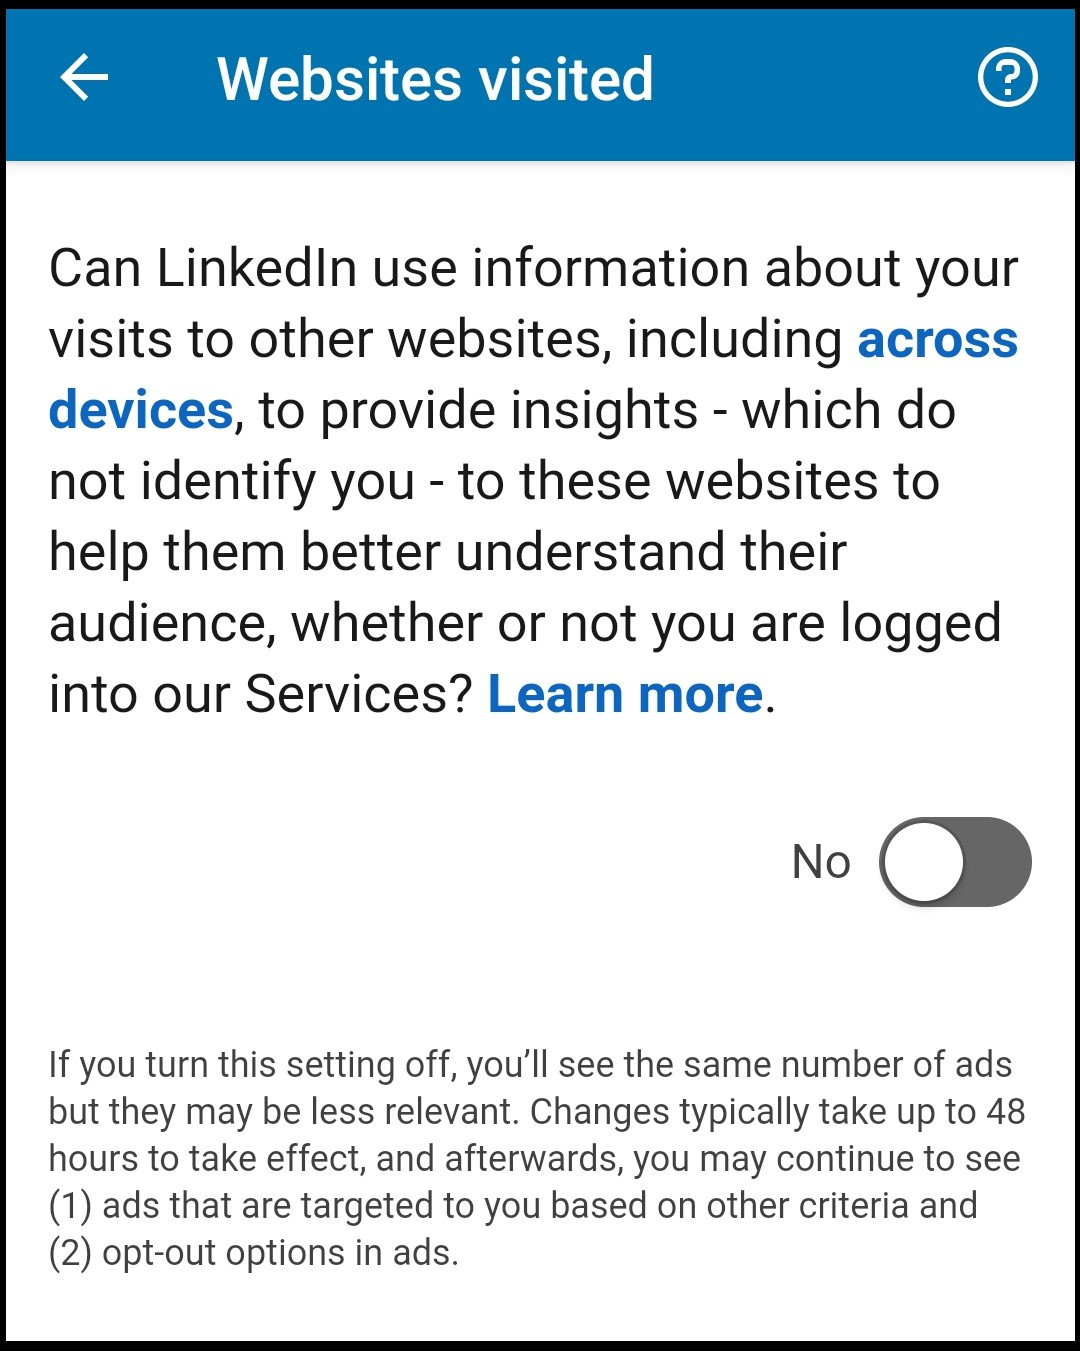 LinkedIn Privacy Settings